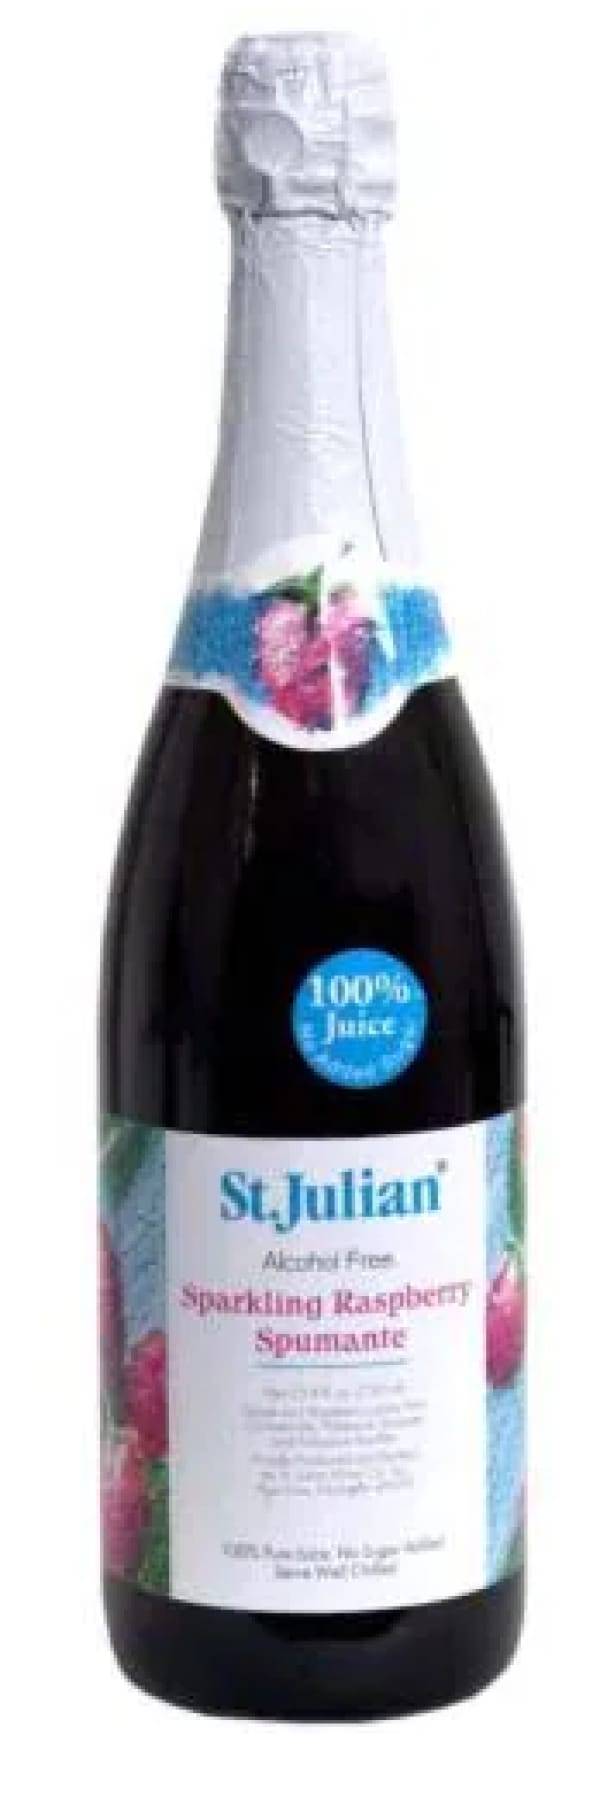 St. Julian Sparkling Raspberry Spumante (750ml bottle)